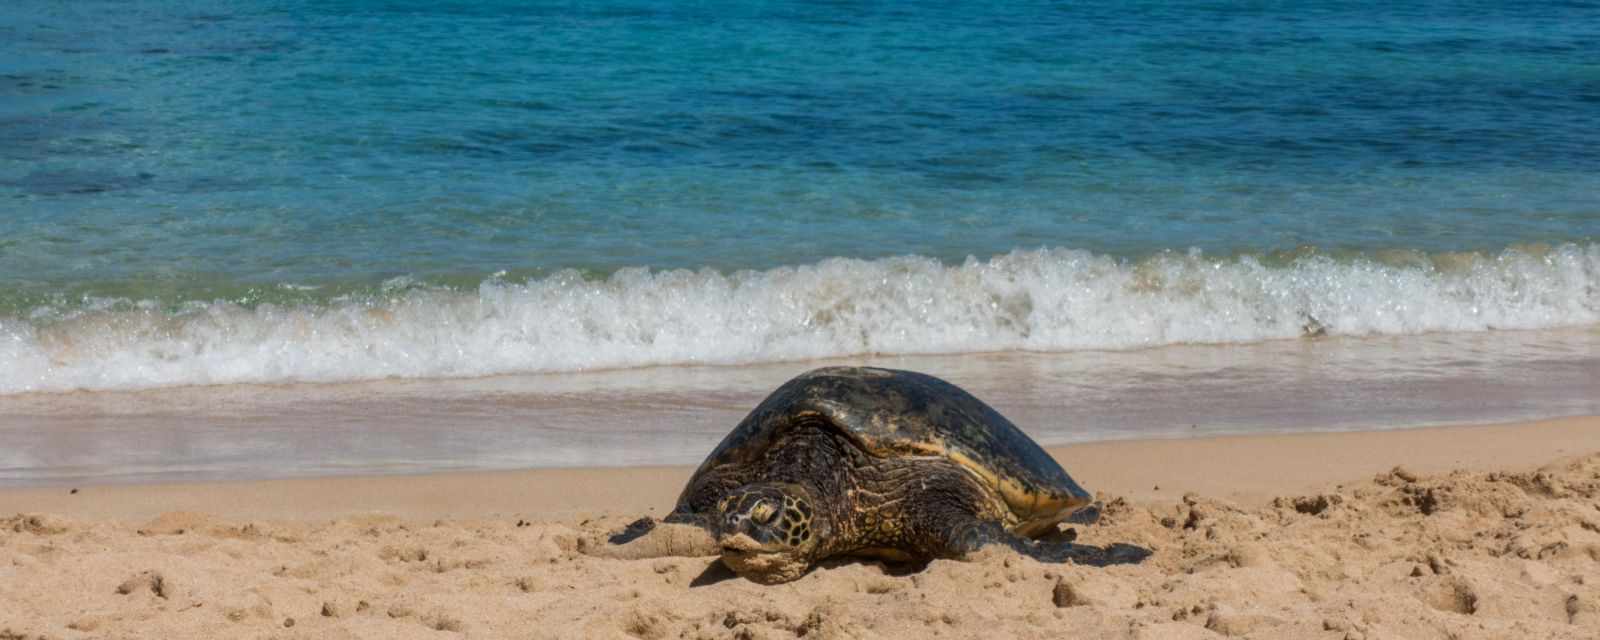 Tips and Seasons for Laniakea Turtle Beach in Oahu - Hawaii 